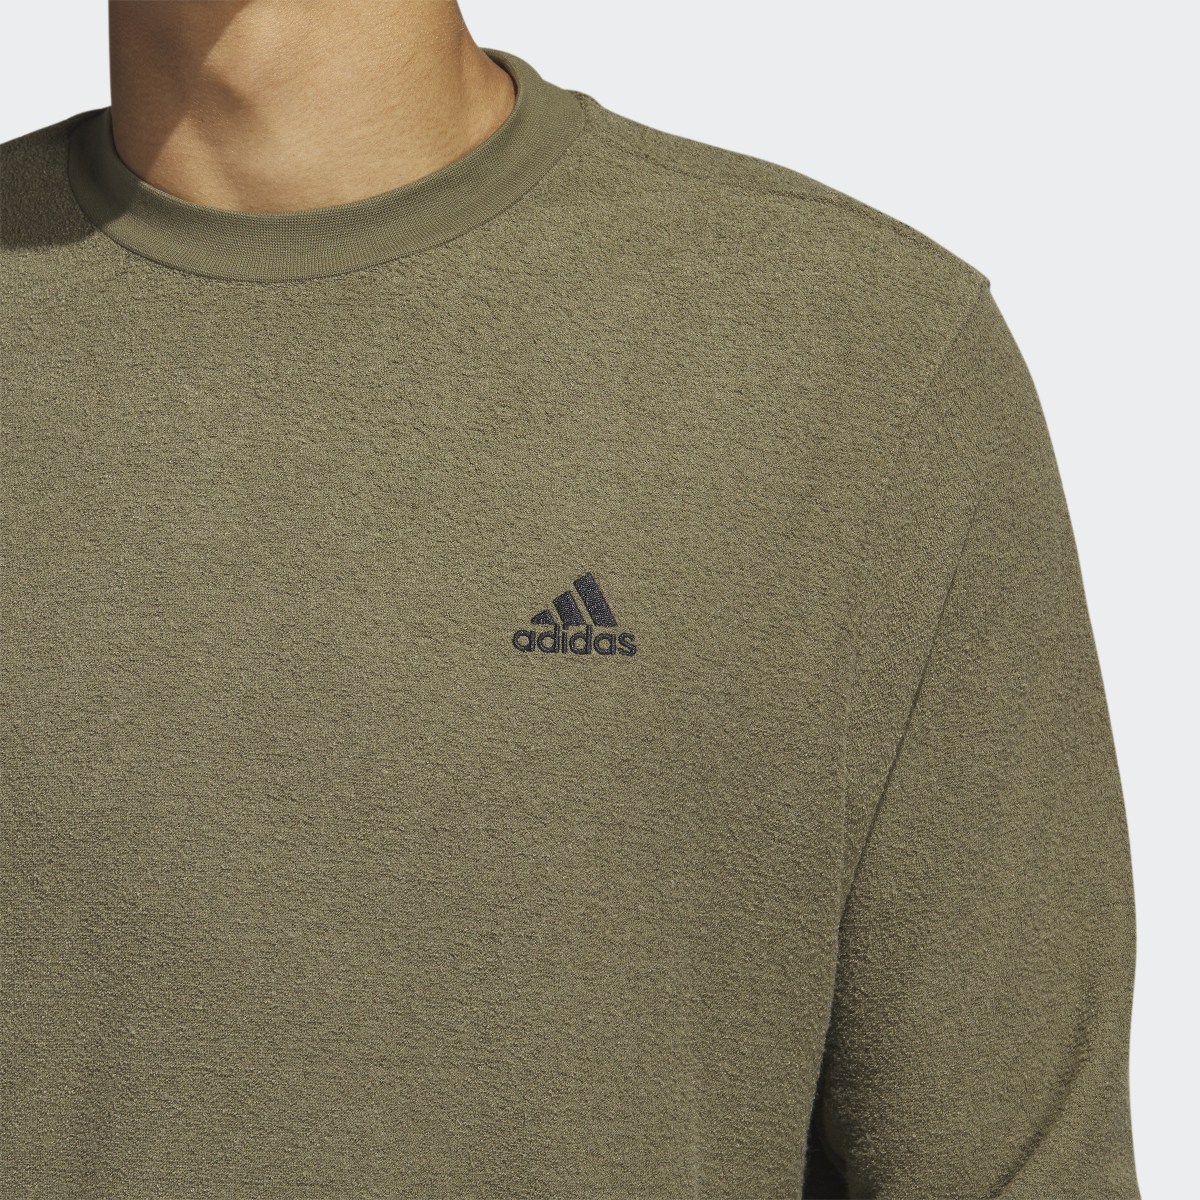 Adidas Core Crew Sweatshirt. 6